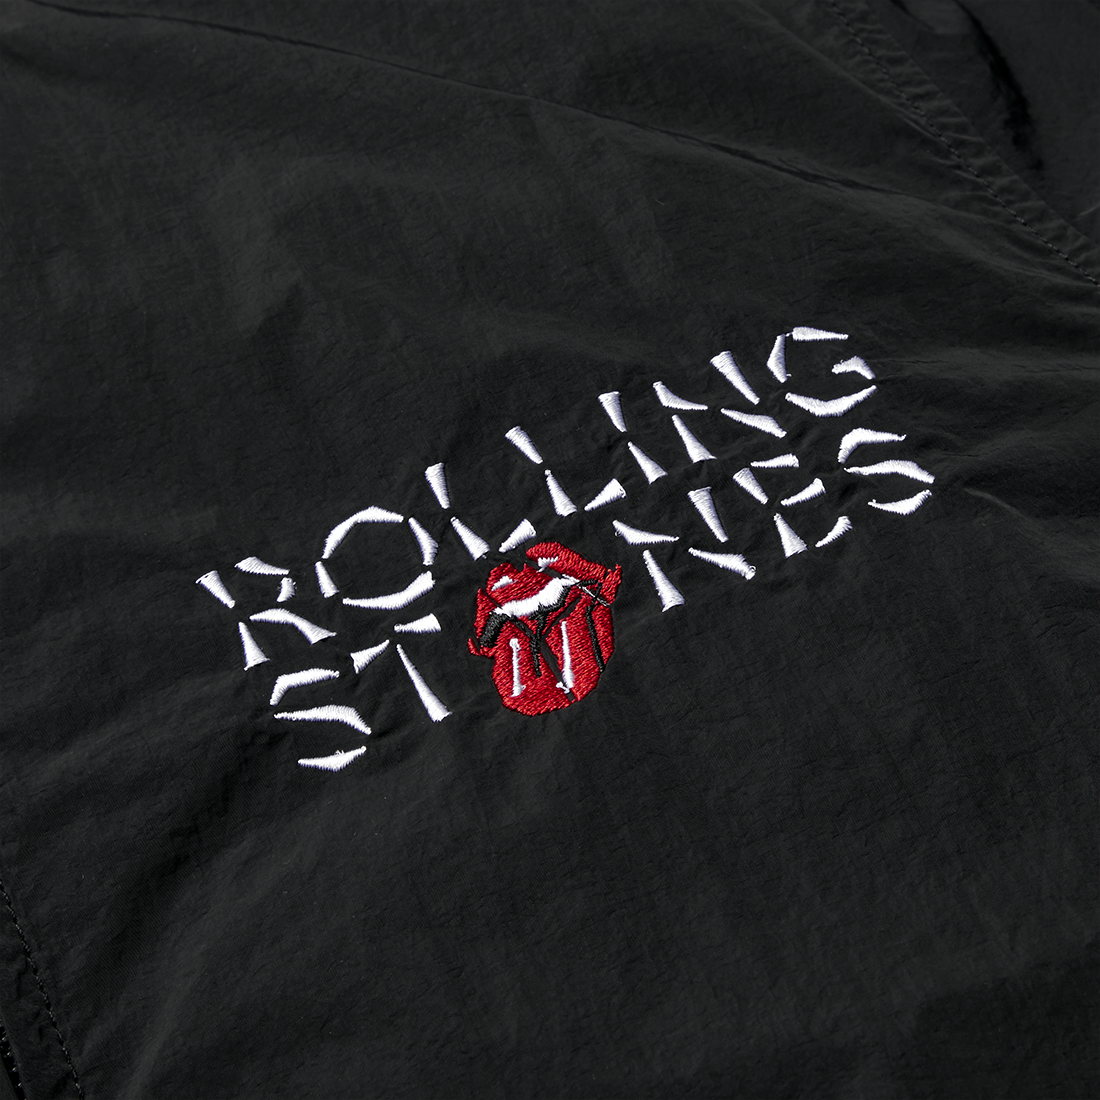 The Rolling Stones - Hackney Diamonds Premium Bomber Jacket